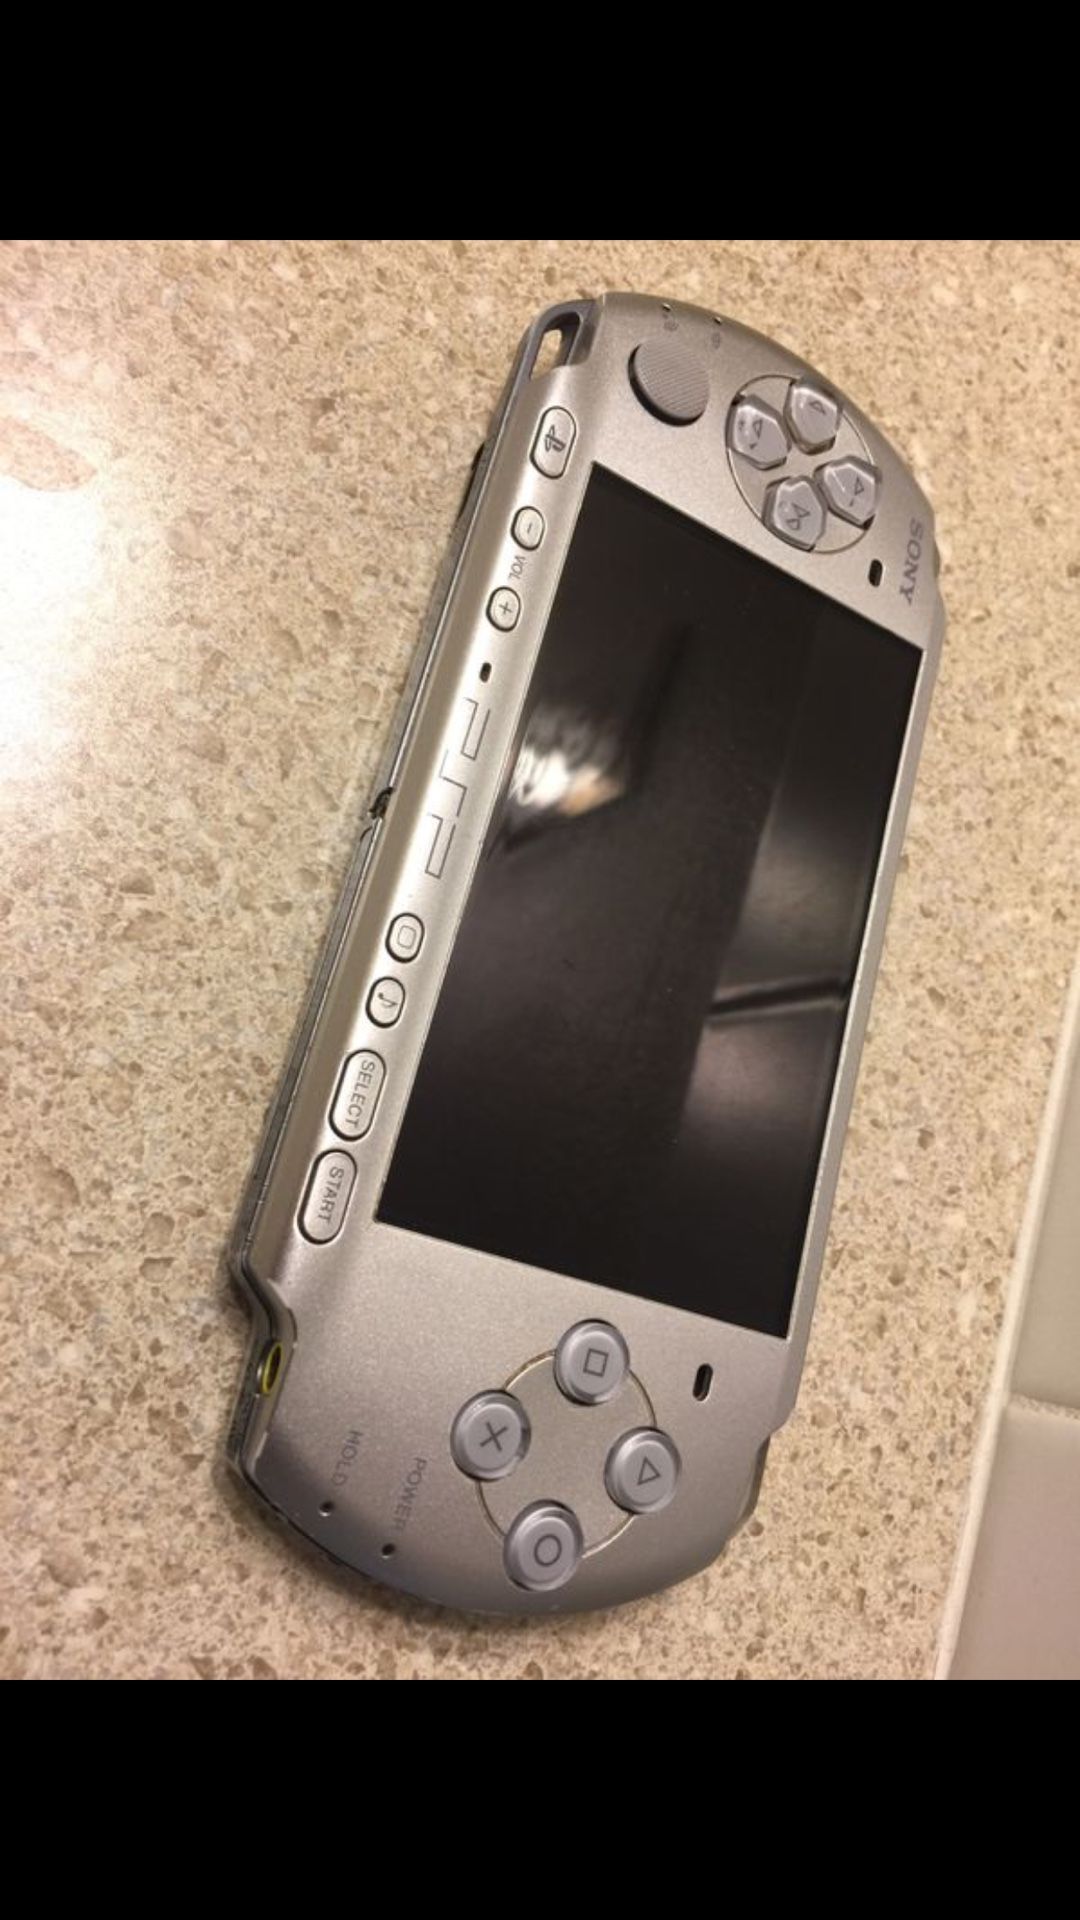 PSP 3000 slim modded 32gb